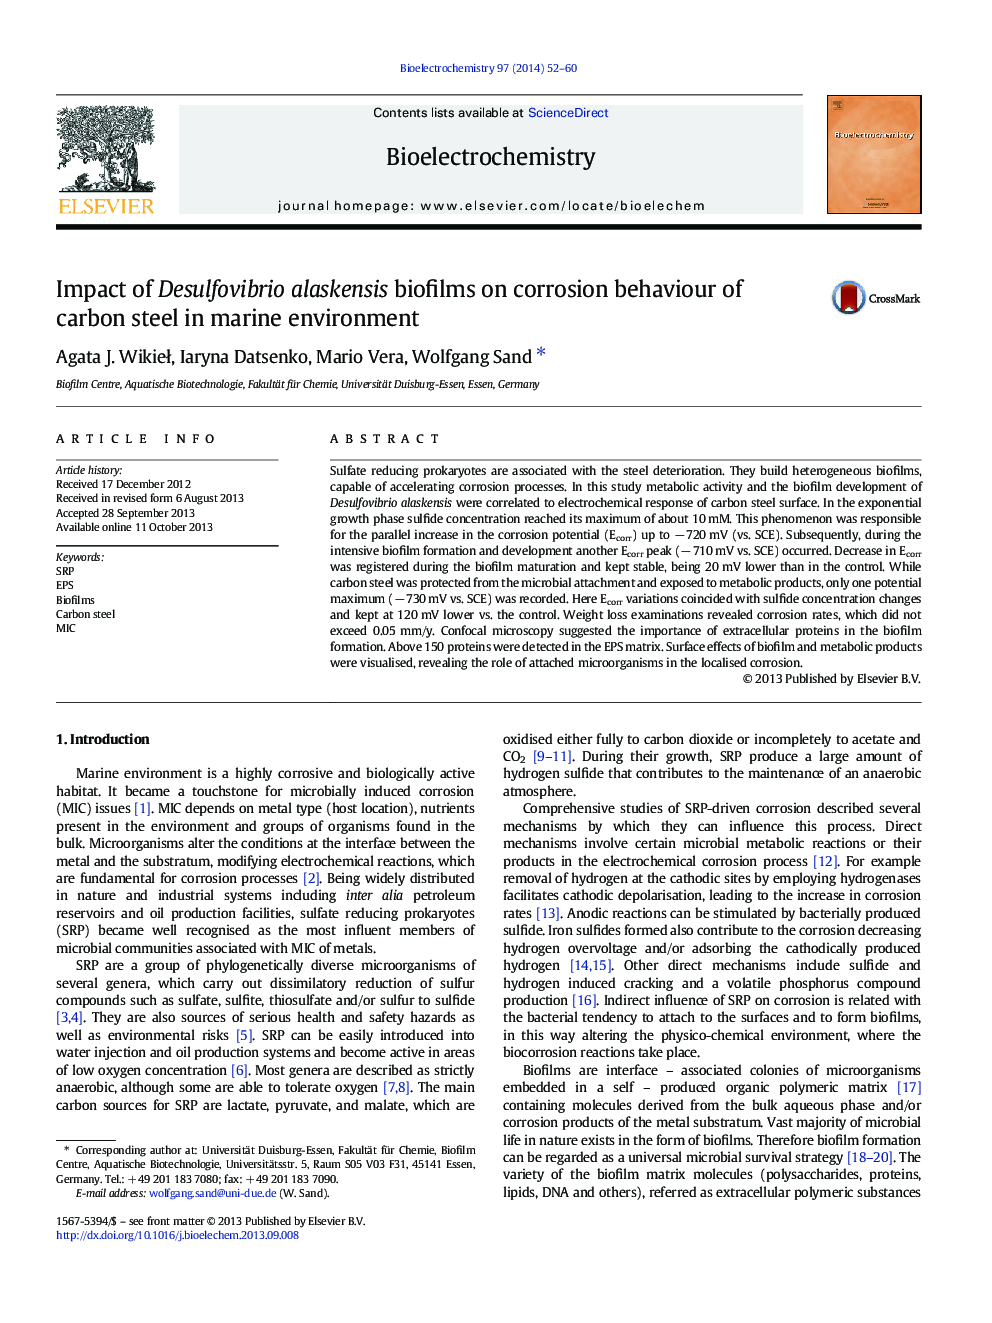 Impact of Desulfovibrio alaskensis biofilms on corrosion behaviour of carbon steel in marine environment